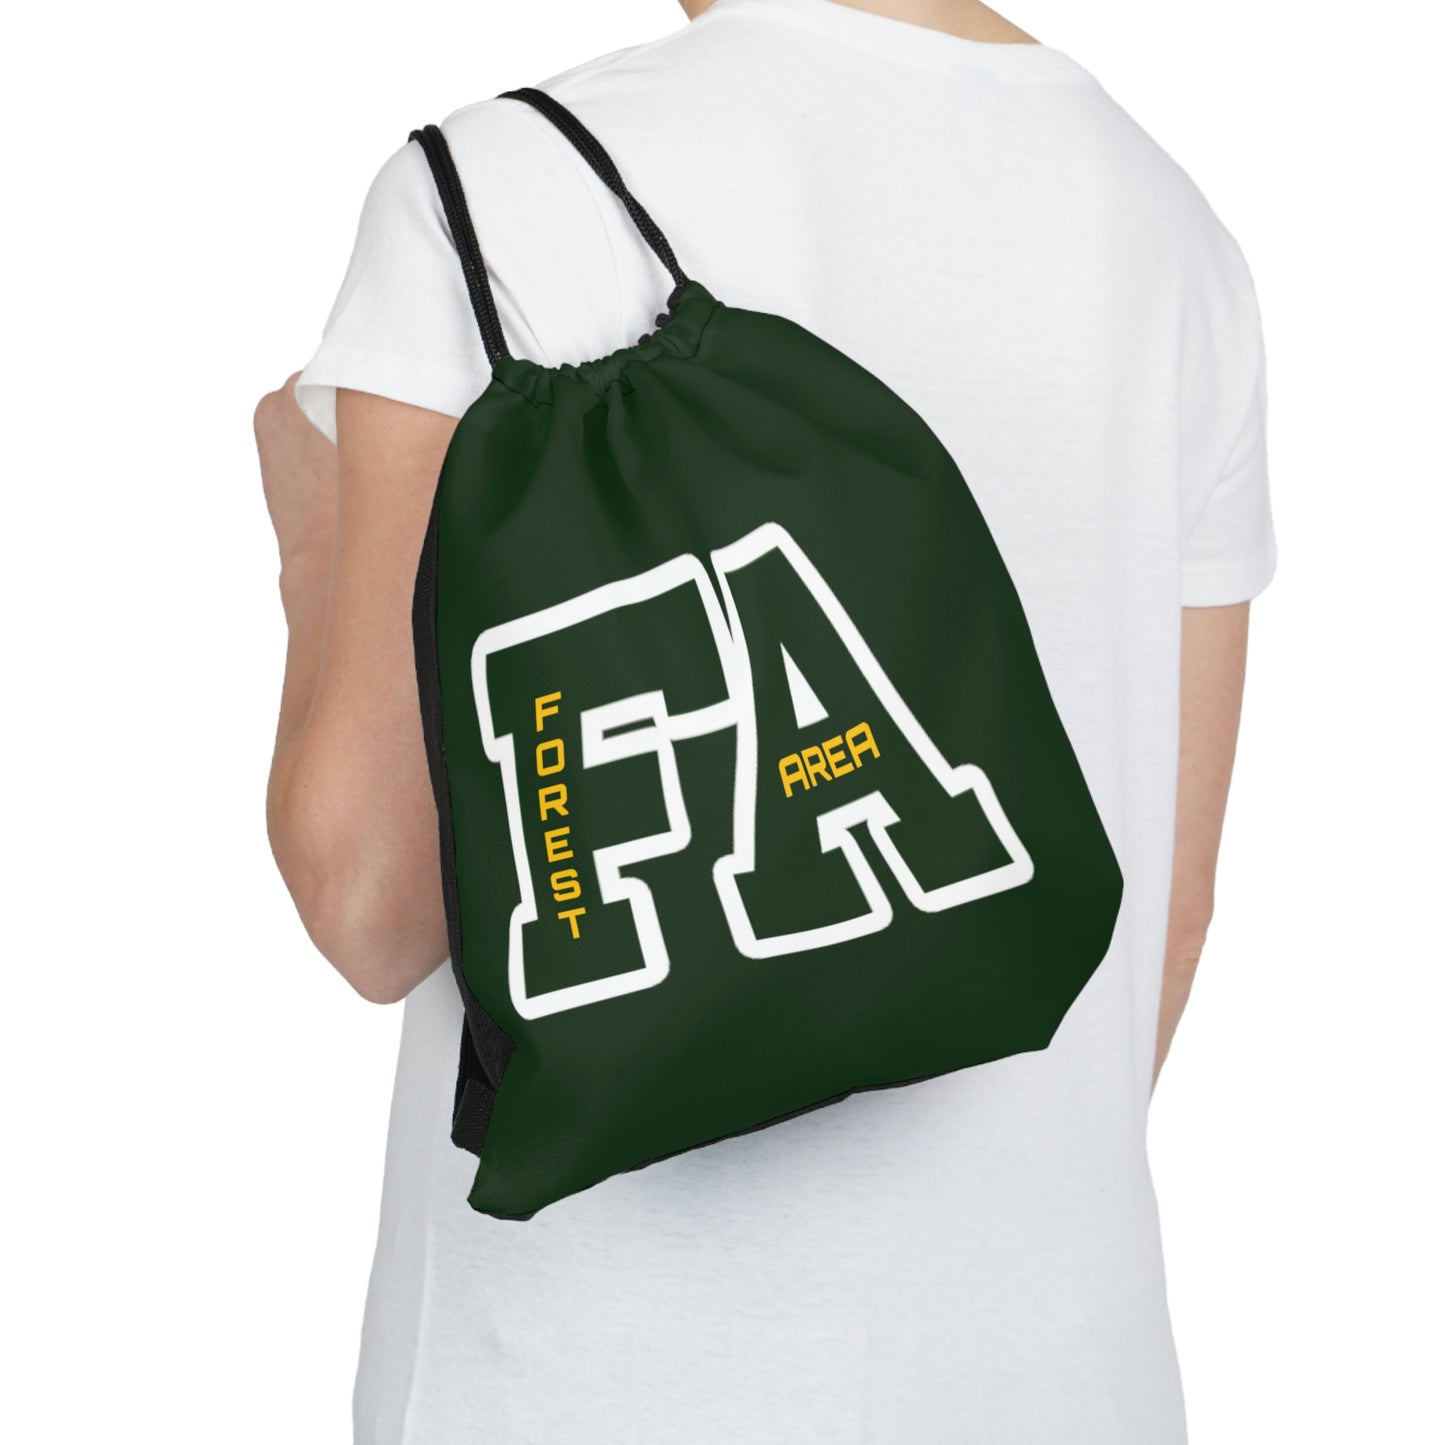 Outdoor Drawstring Bag Logo 1 #F13-02C Gold